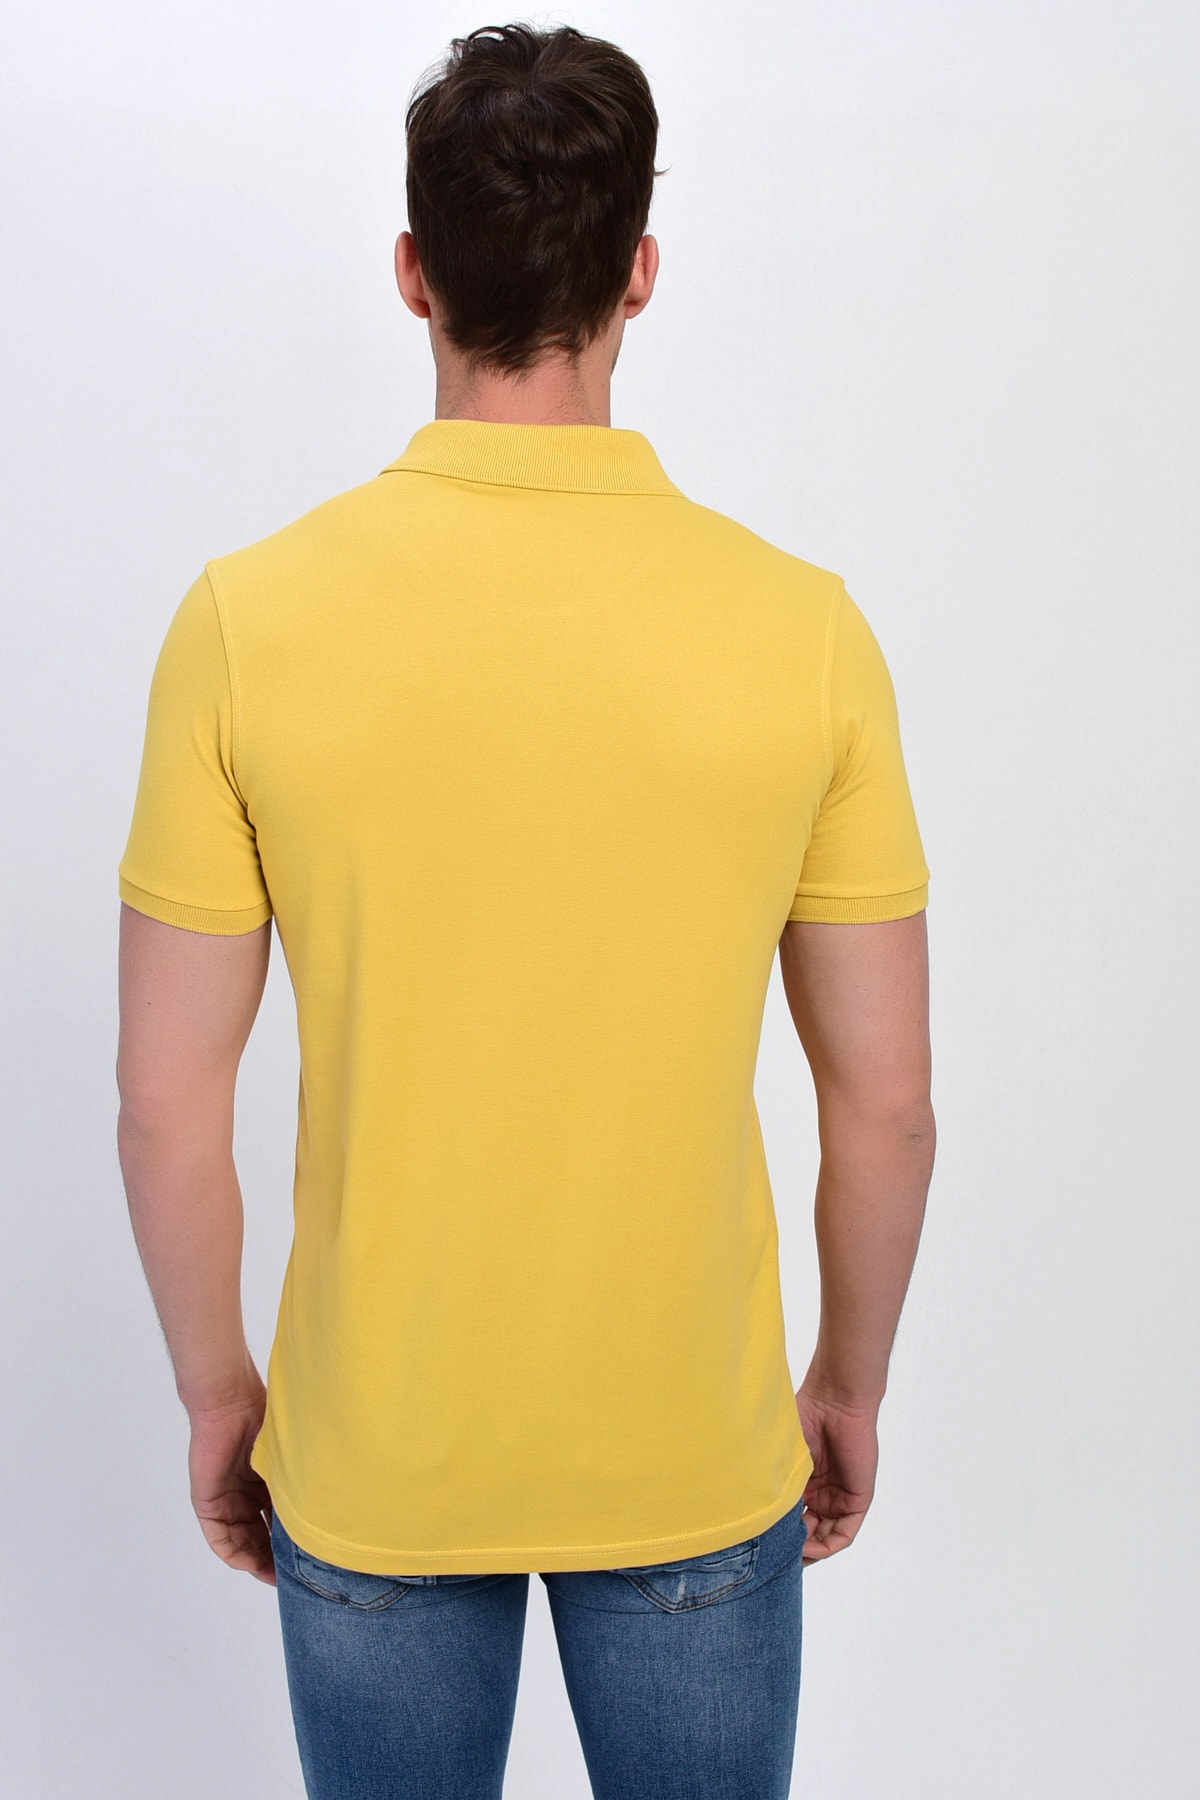 DYNAMO Poloshirt Gelb Slim Fit Fast ausverkauft